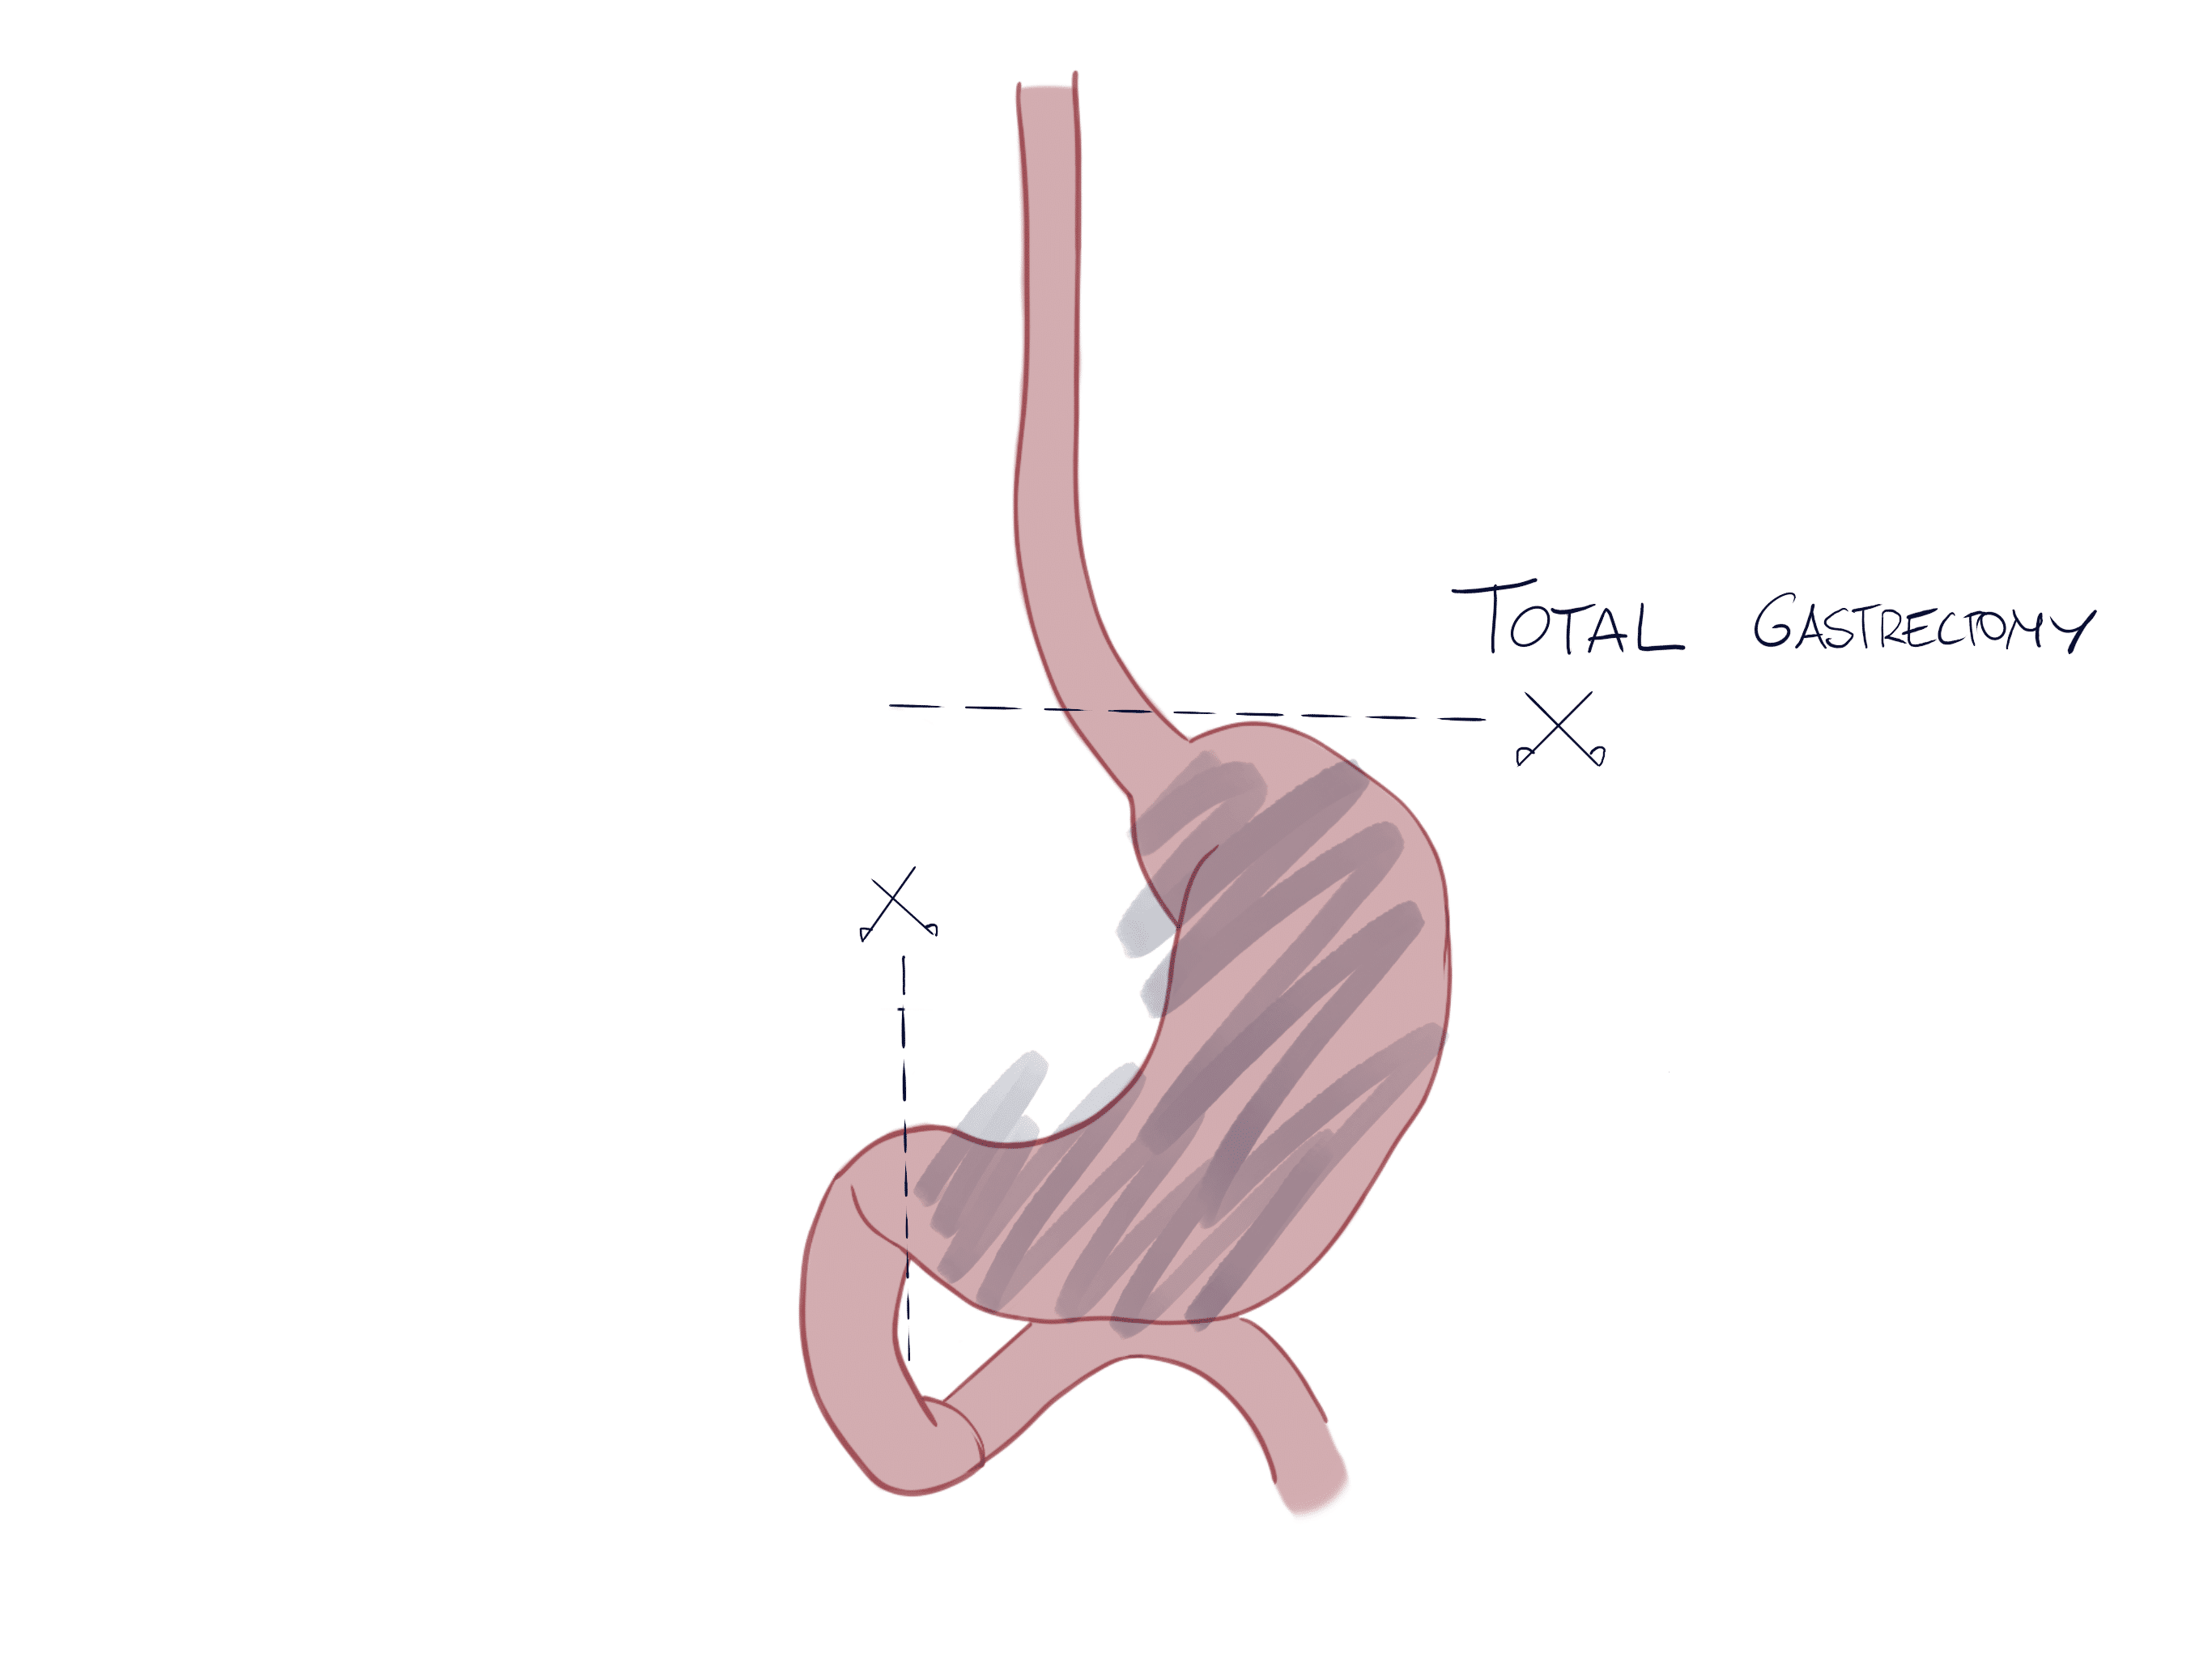 Total Gastrectomy for Gastric Cancer